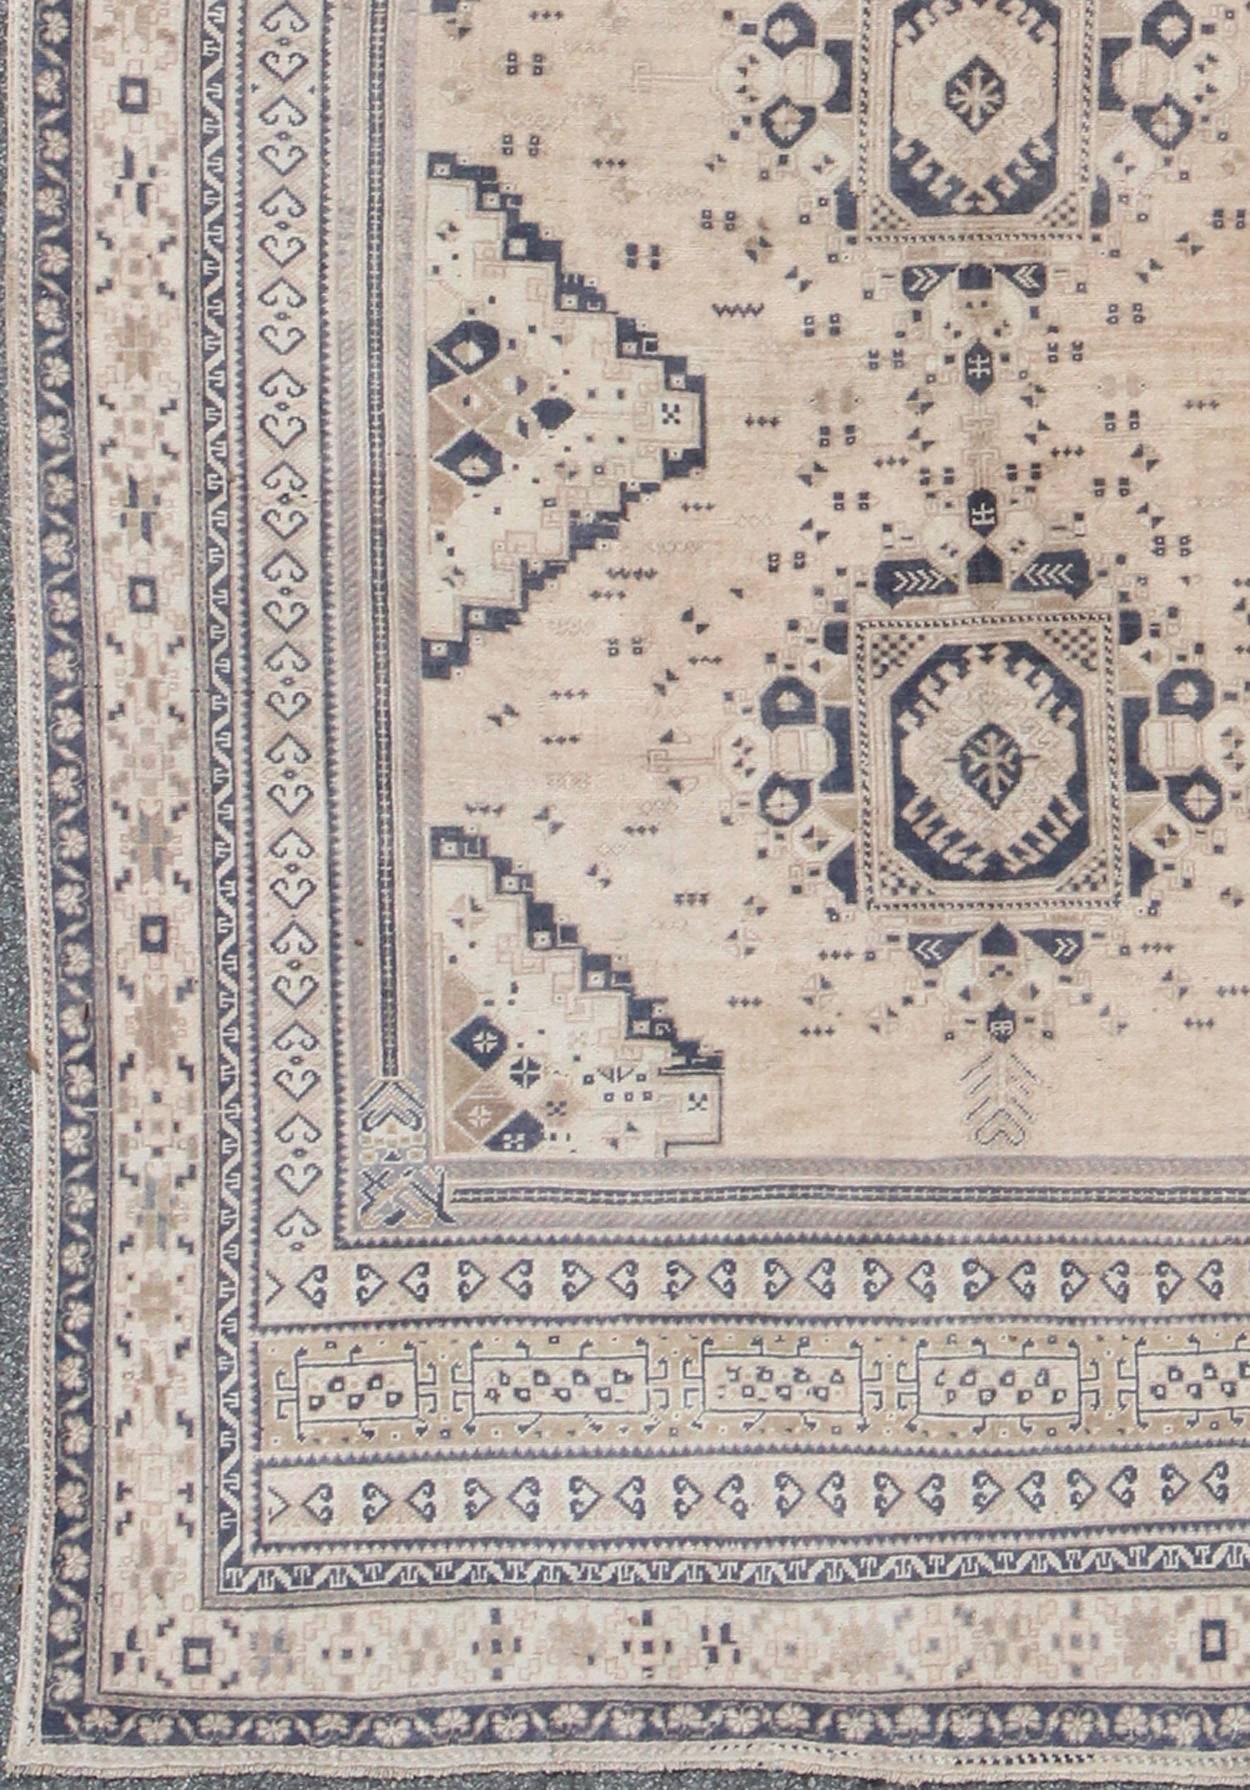 Light blush and navy blue vintage Turkish Oushak rug with Tri-Medallion design, rug tu-mtu-3746, country of origin / type: Turkey / Oushak, circa 1940

This vintage Turkish Oushak carpet (circa 1940) features a central tri-medallion design, as well